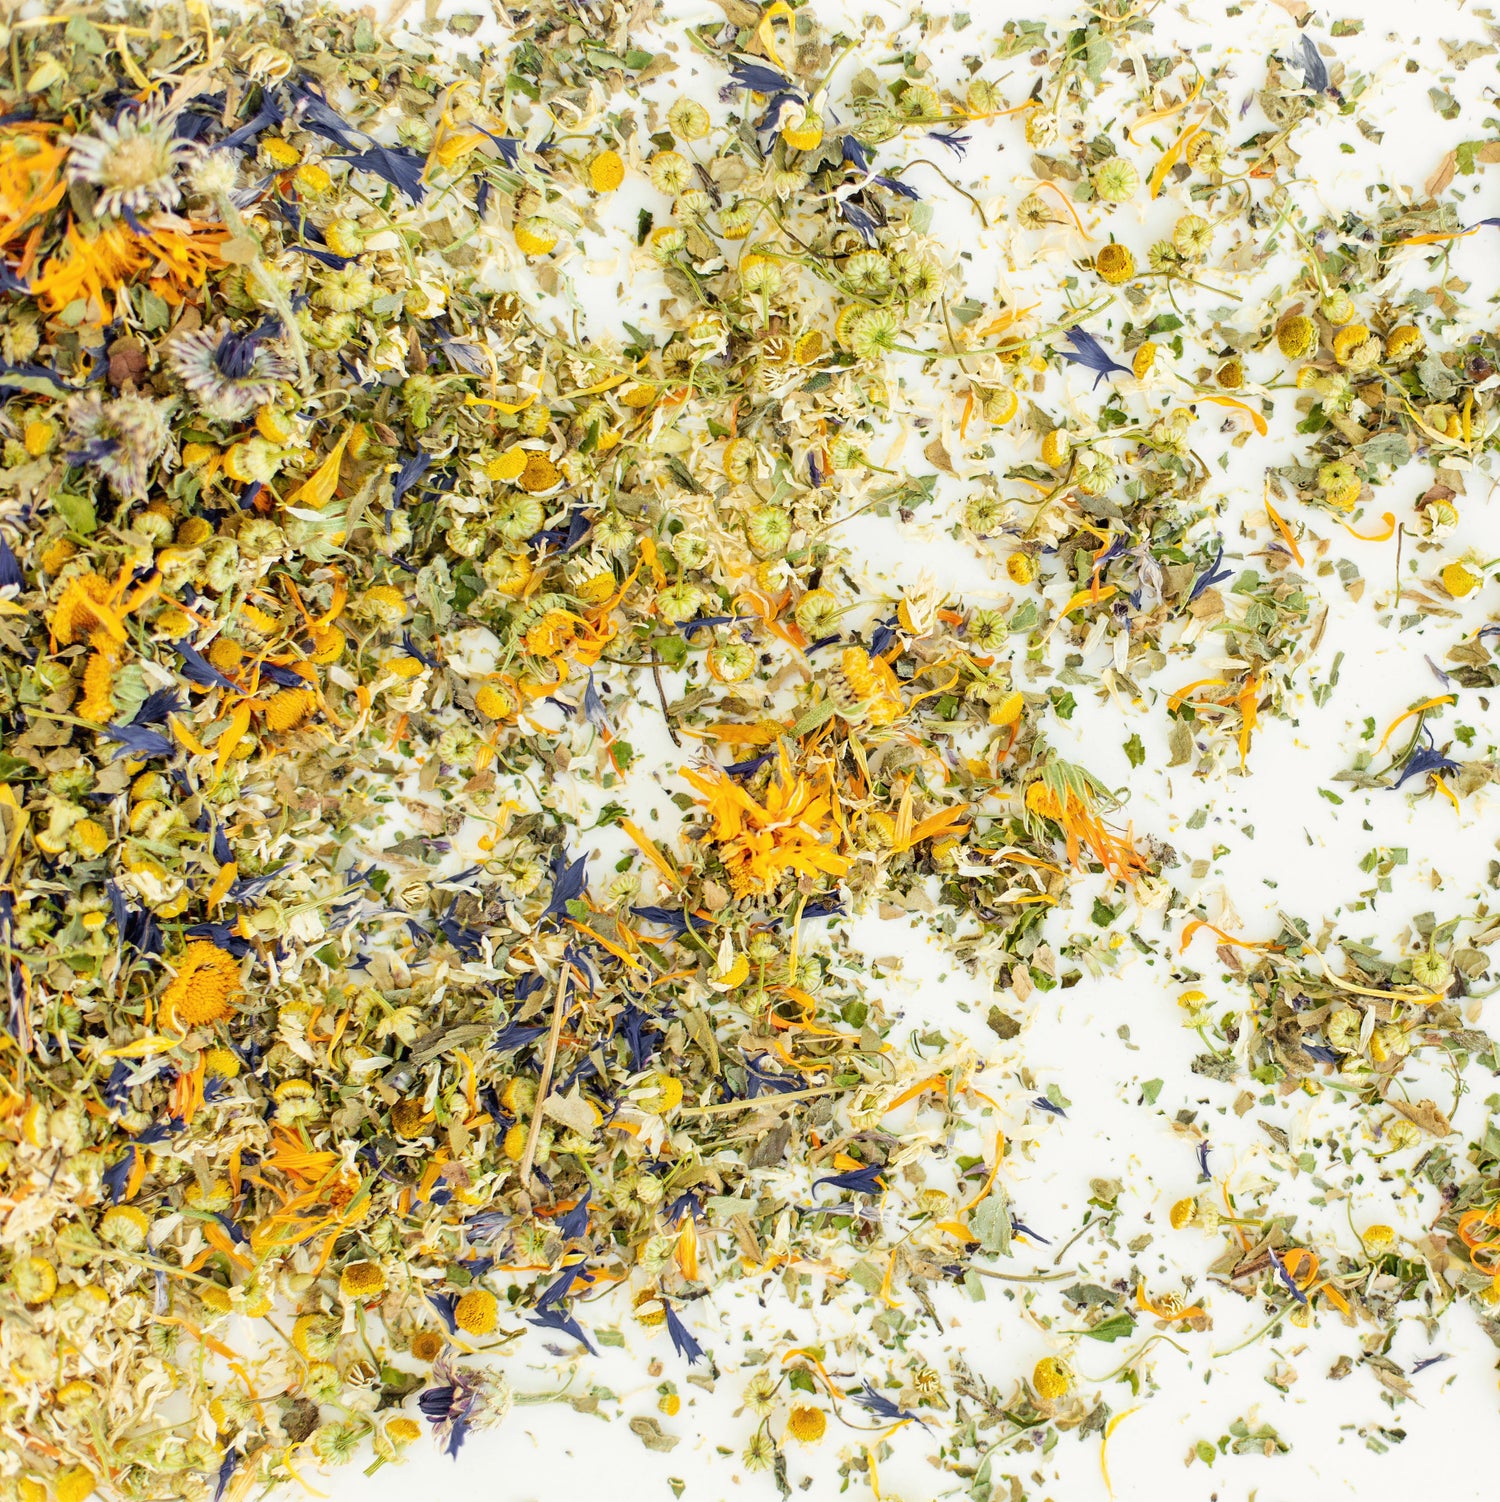 Flower tea loose leaf herb on white background, herbal tea for joy pleasure and delight